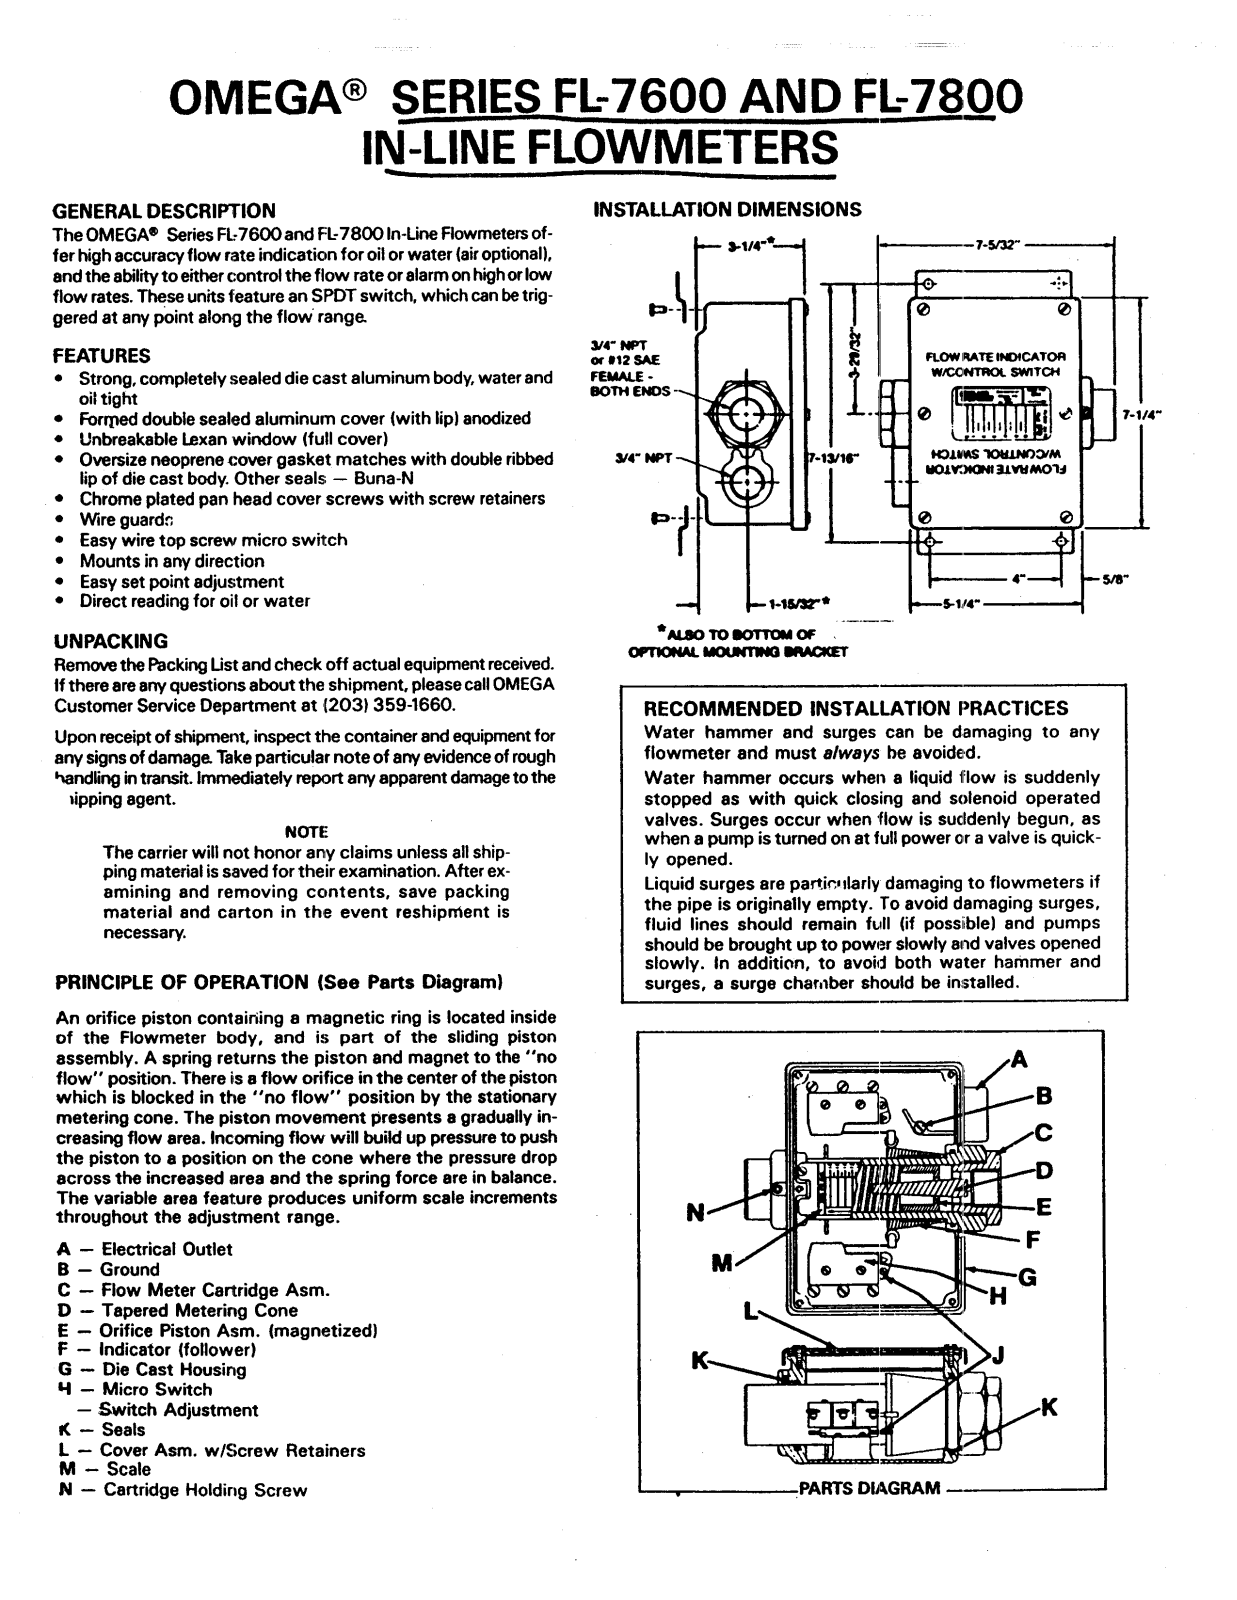 Omega FL-7800, FL-7600 User Manual